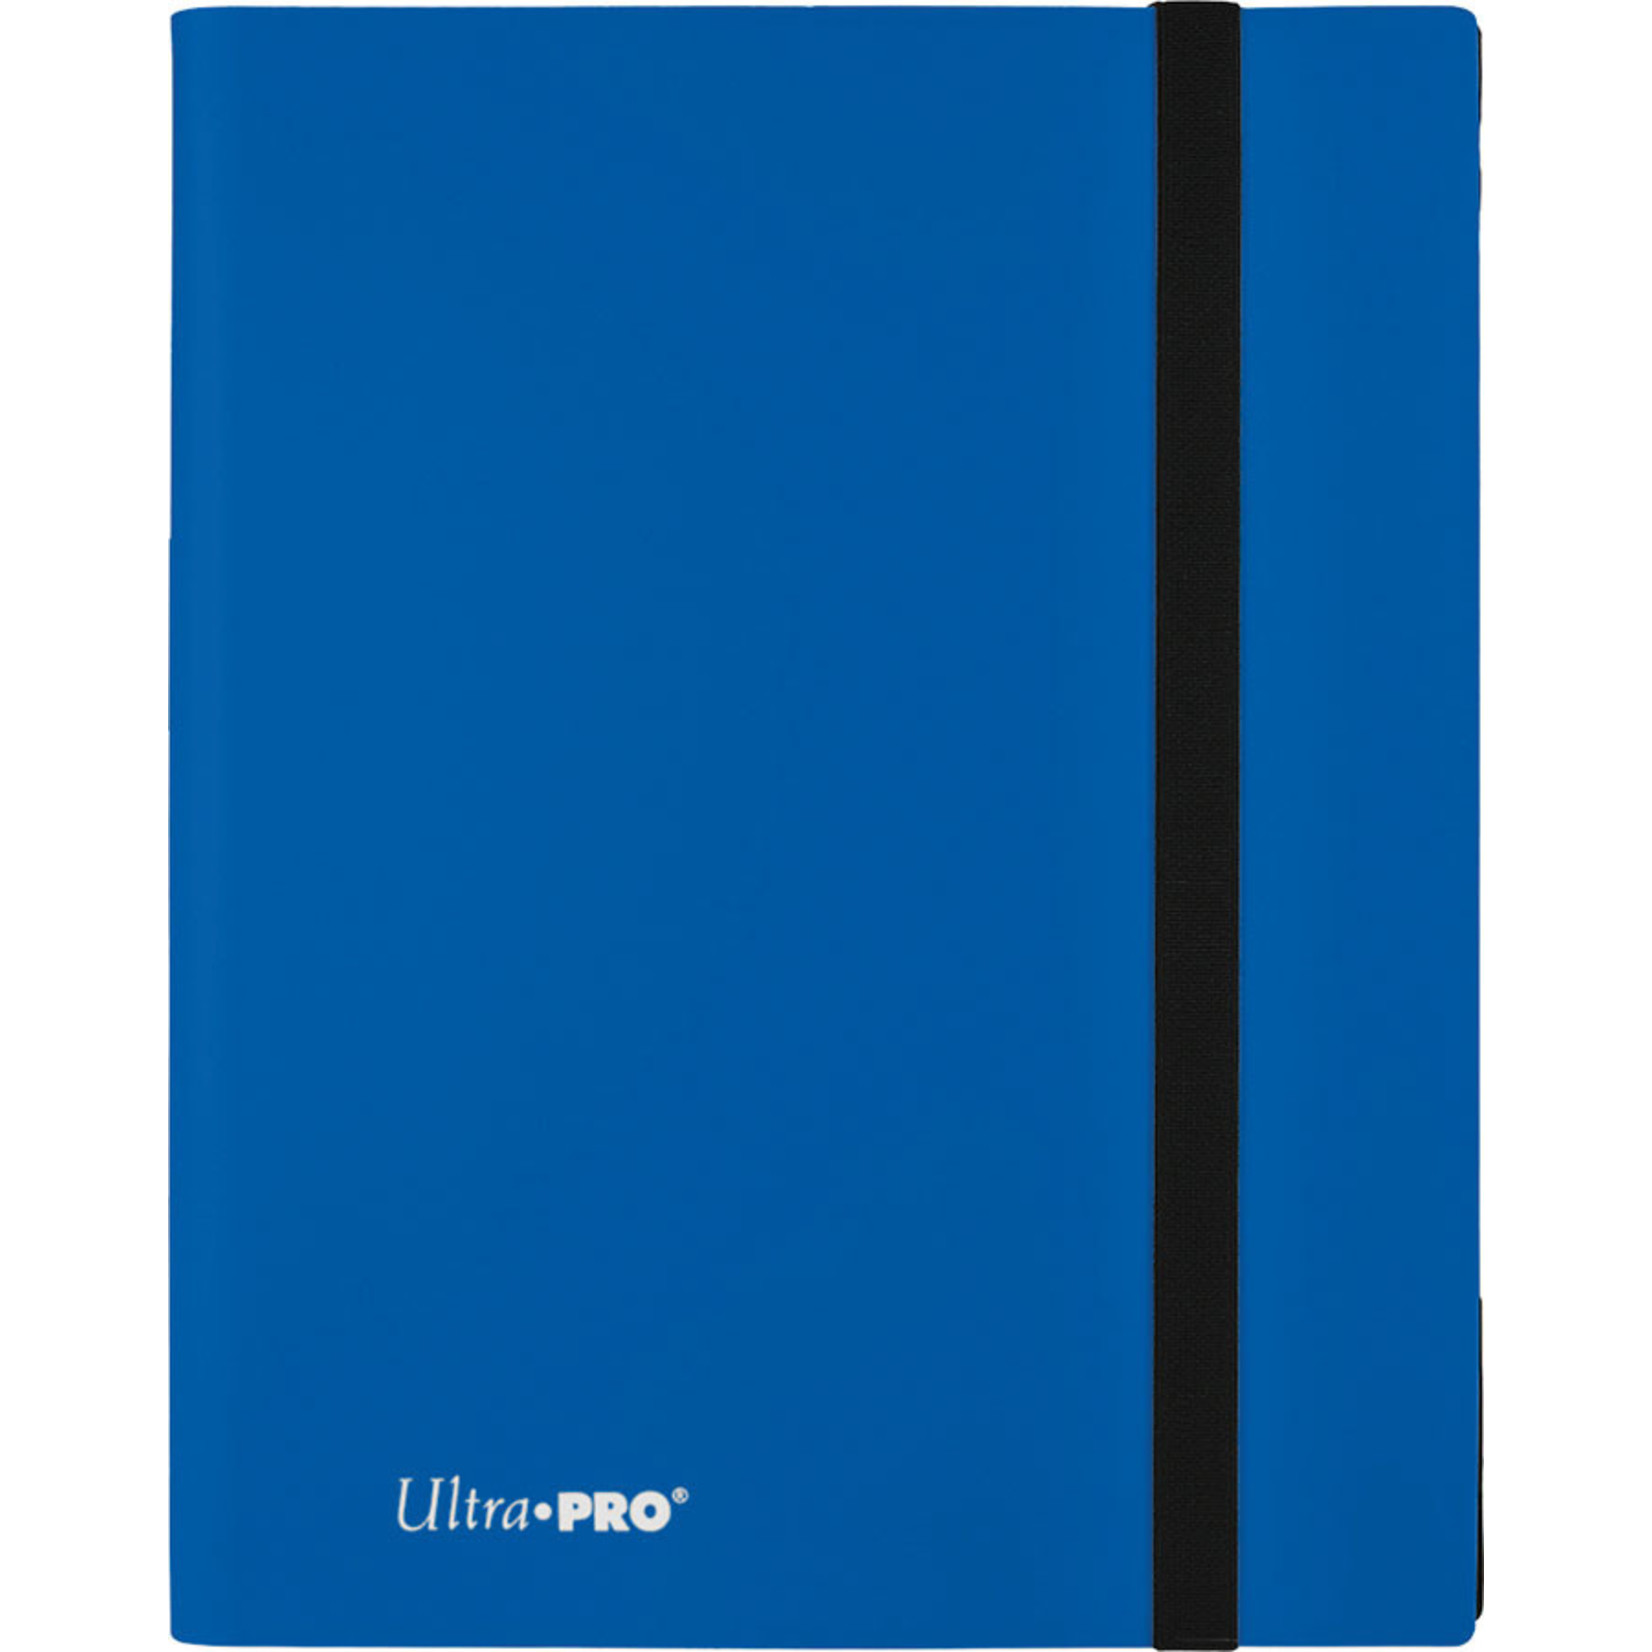 Ultra Pro Pro-Binder Eclipse 9-pocket Pacific Blue